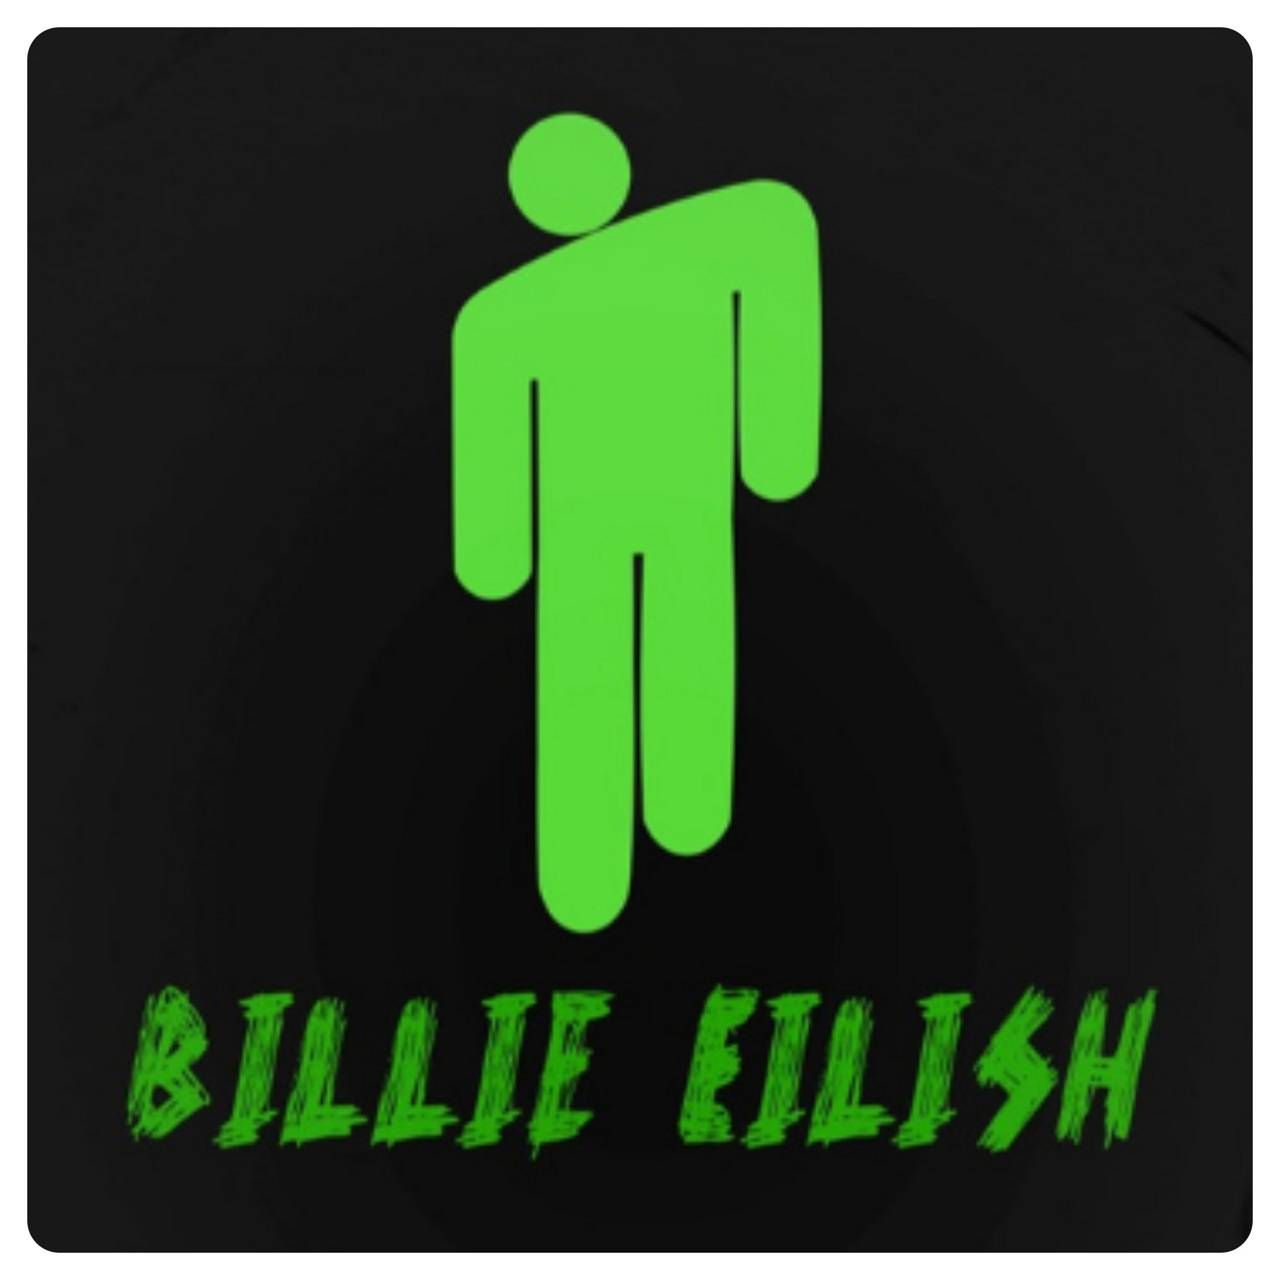 Billie Eilish Logo Pc Wallpaper